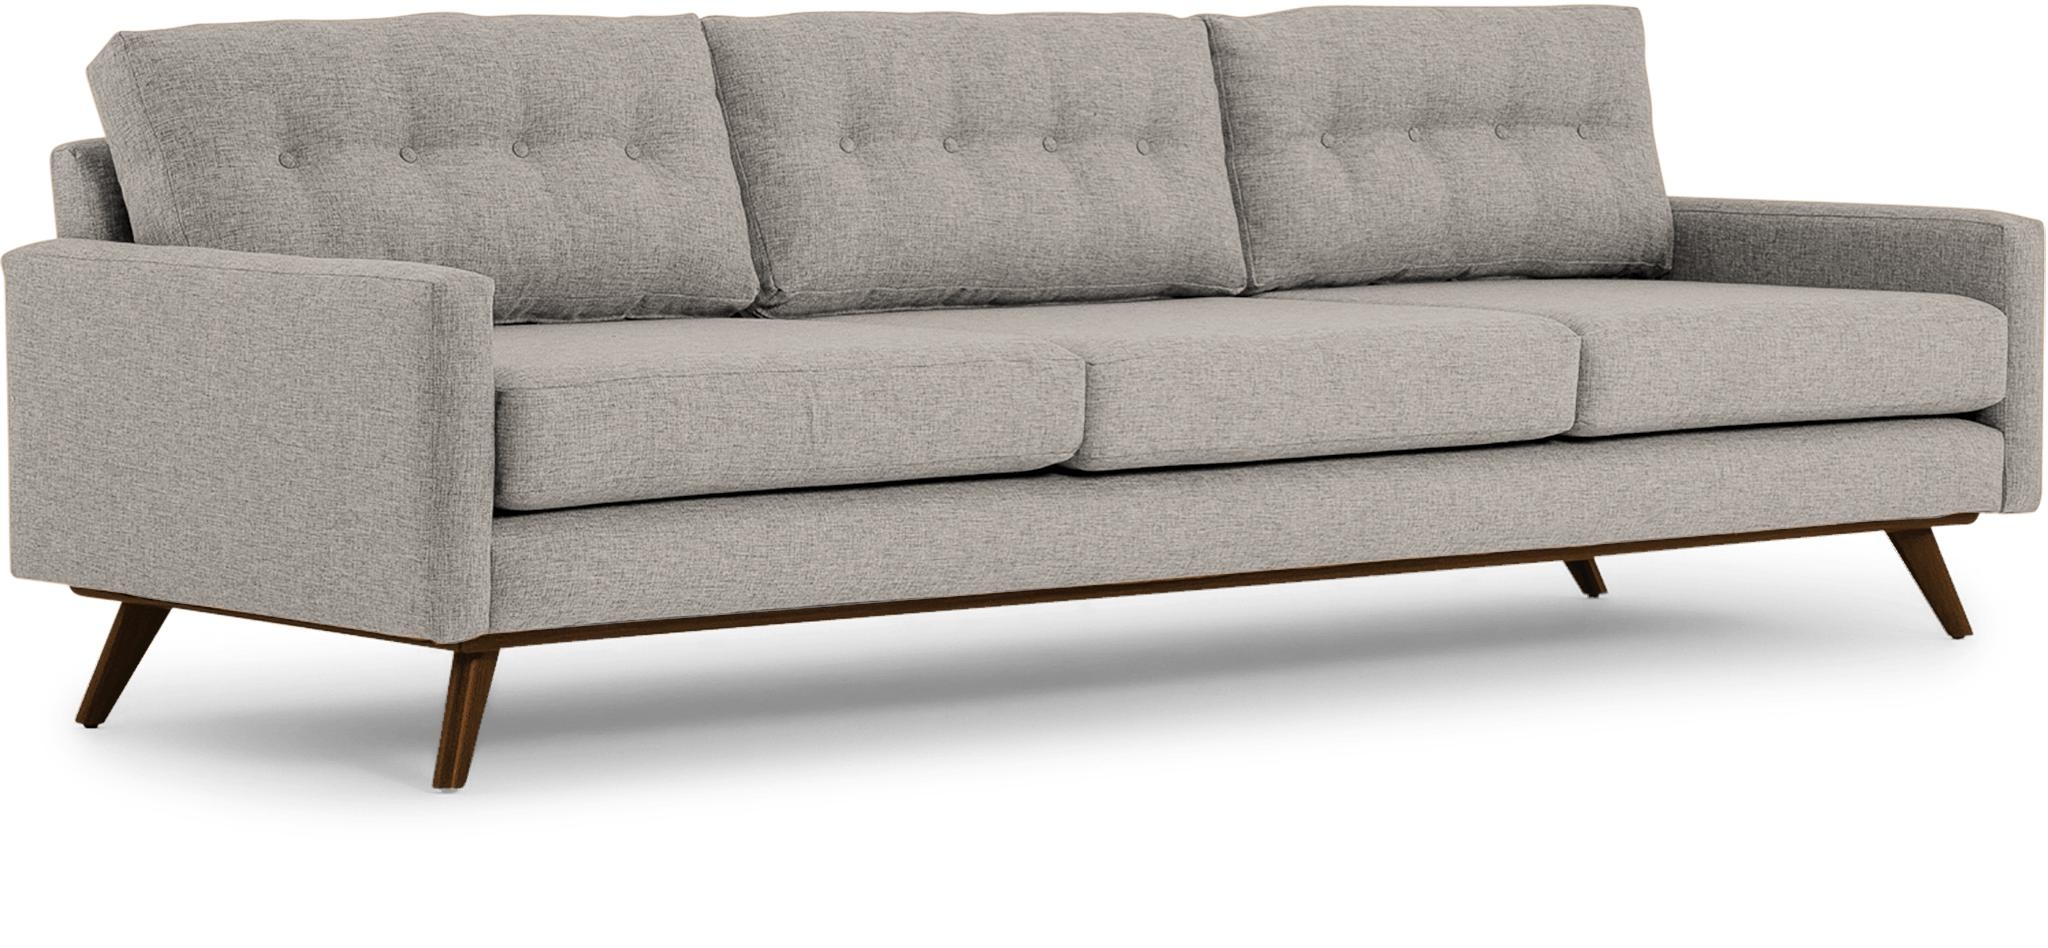 Gray Hopson Mid Century Modern Grand Sofa - Prime Stone - Mocha - Image 1